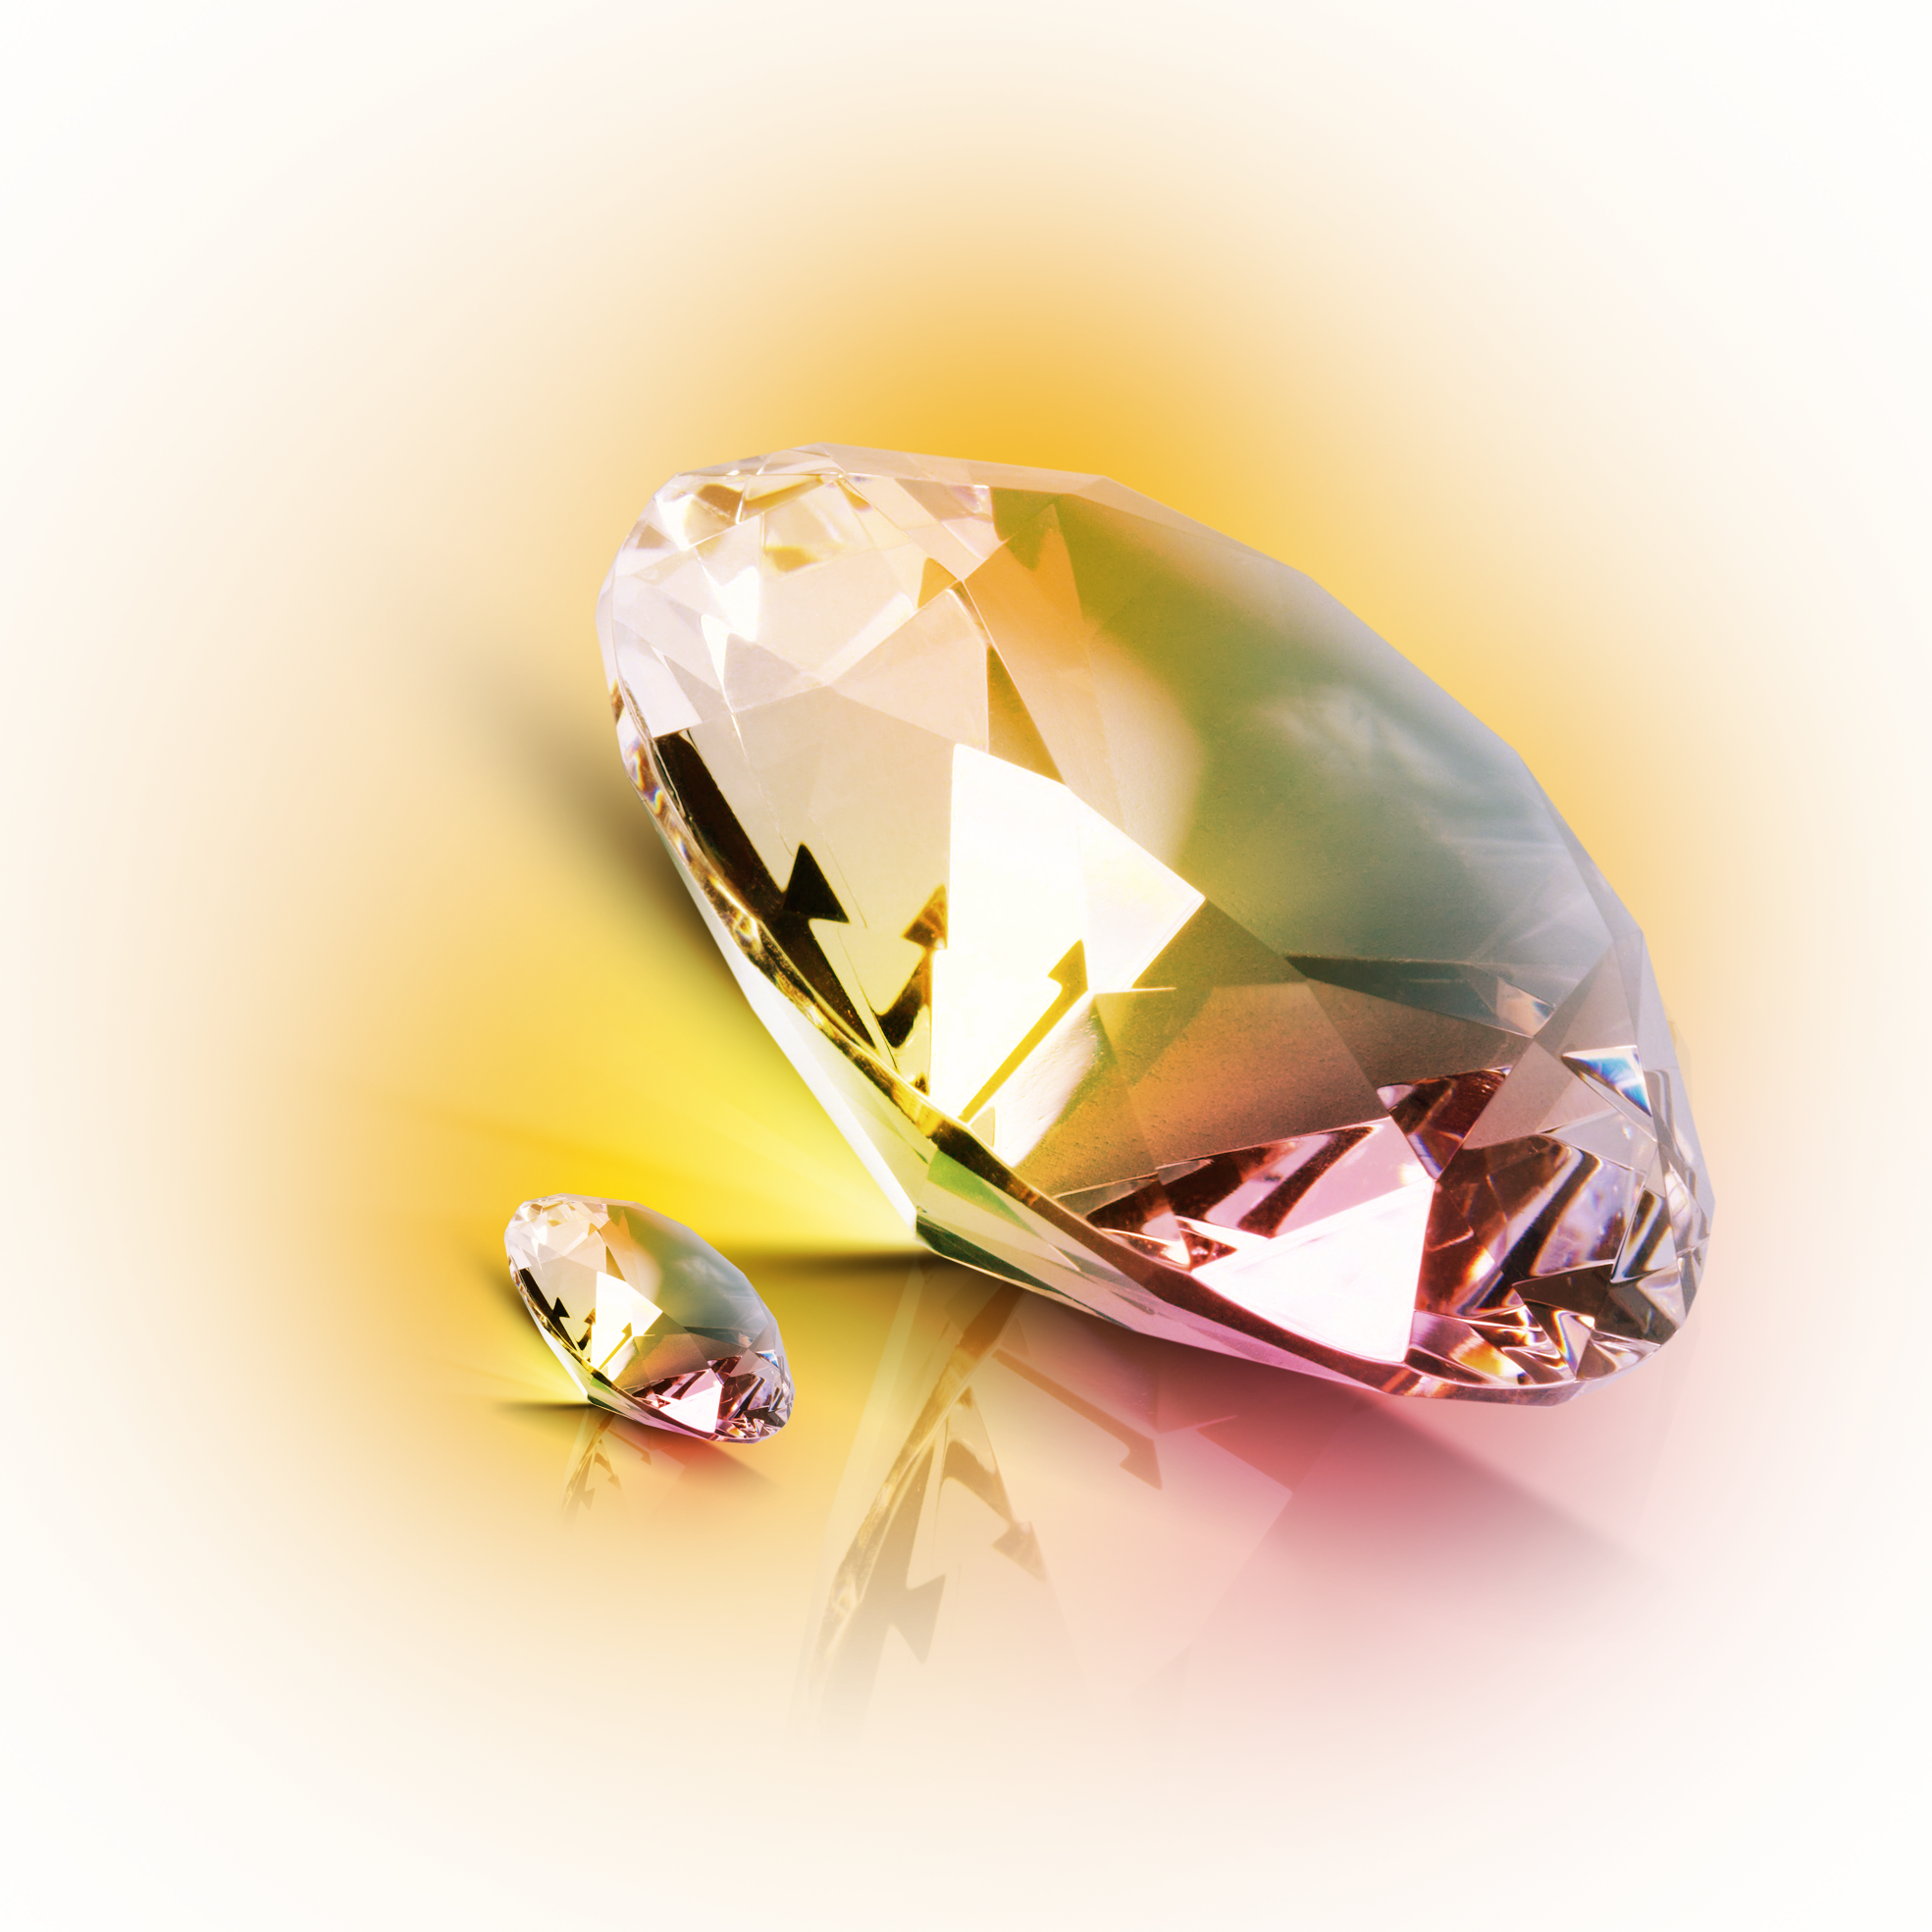 Diamond Gemstone Jewellery HQ Image Free PNG Clipart